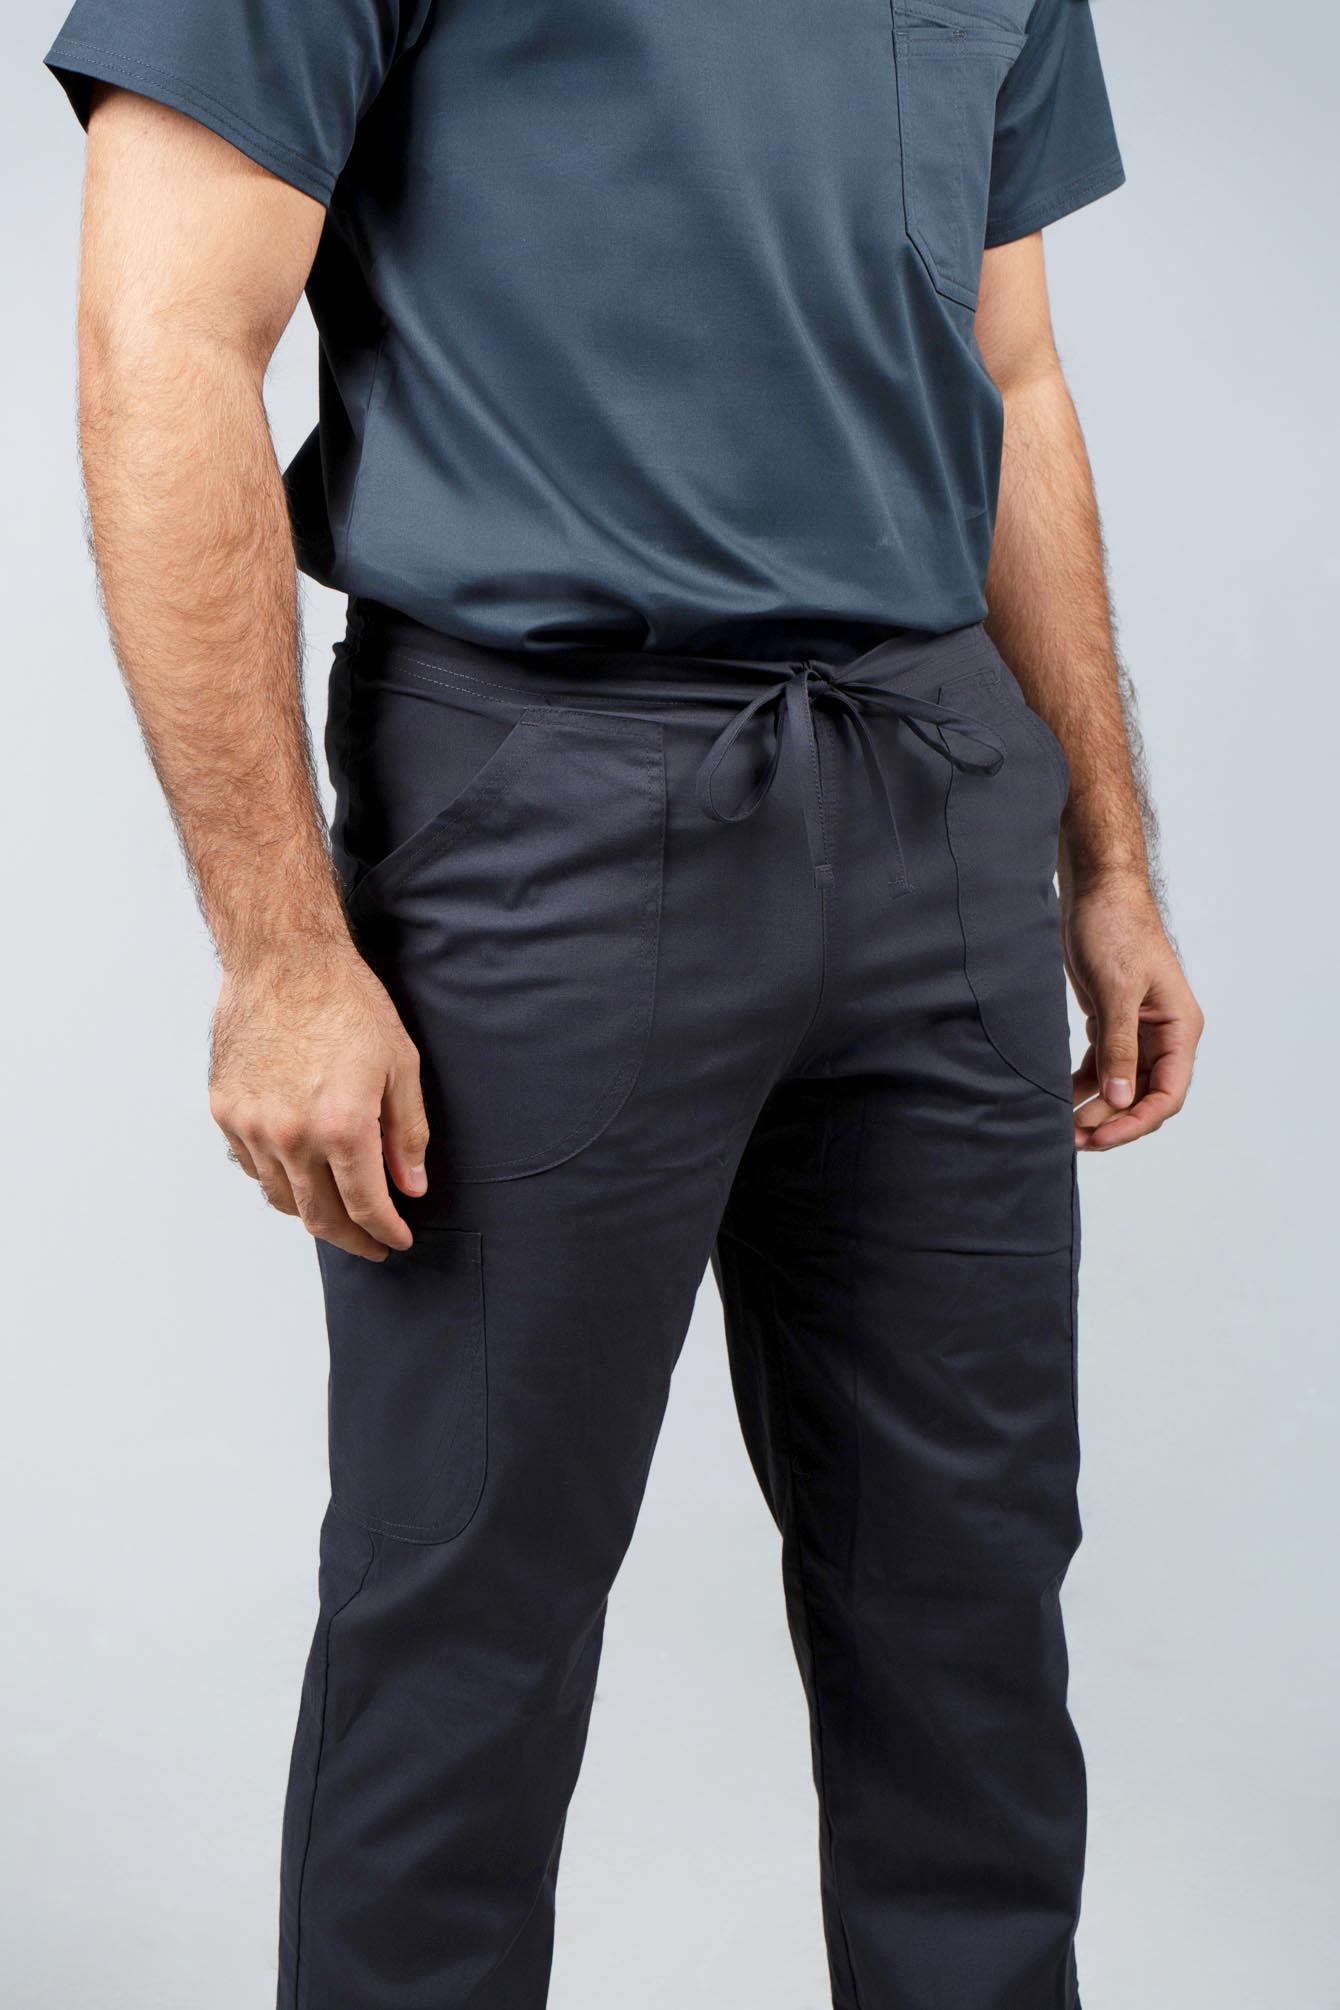 Men's 4-Pocket Scrub Pant - Black – Rhino Scrubs Official